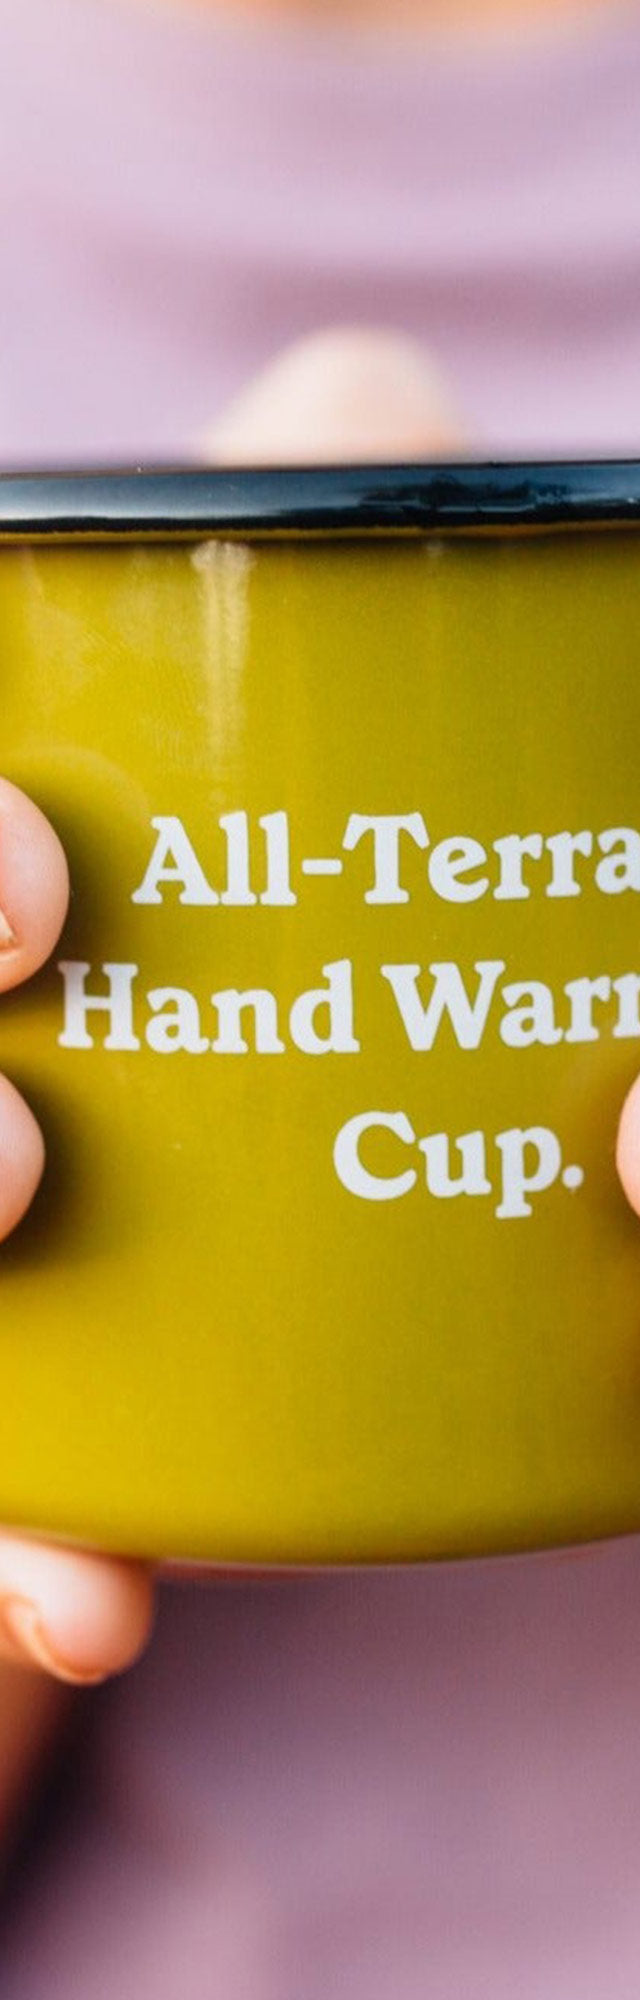 All-Terrain Camp Cup